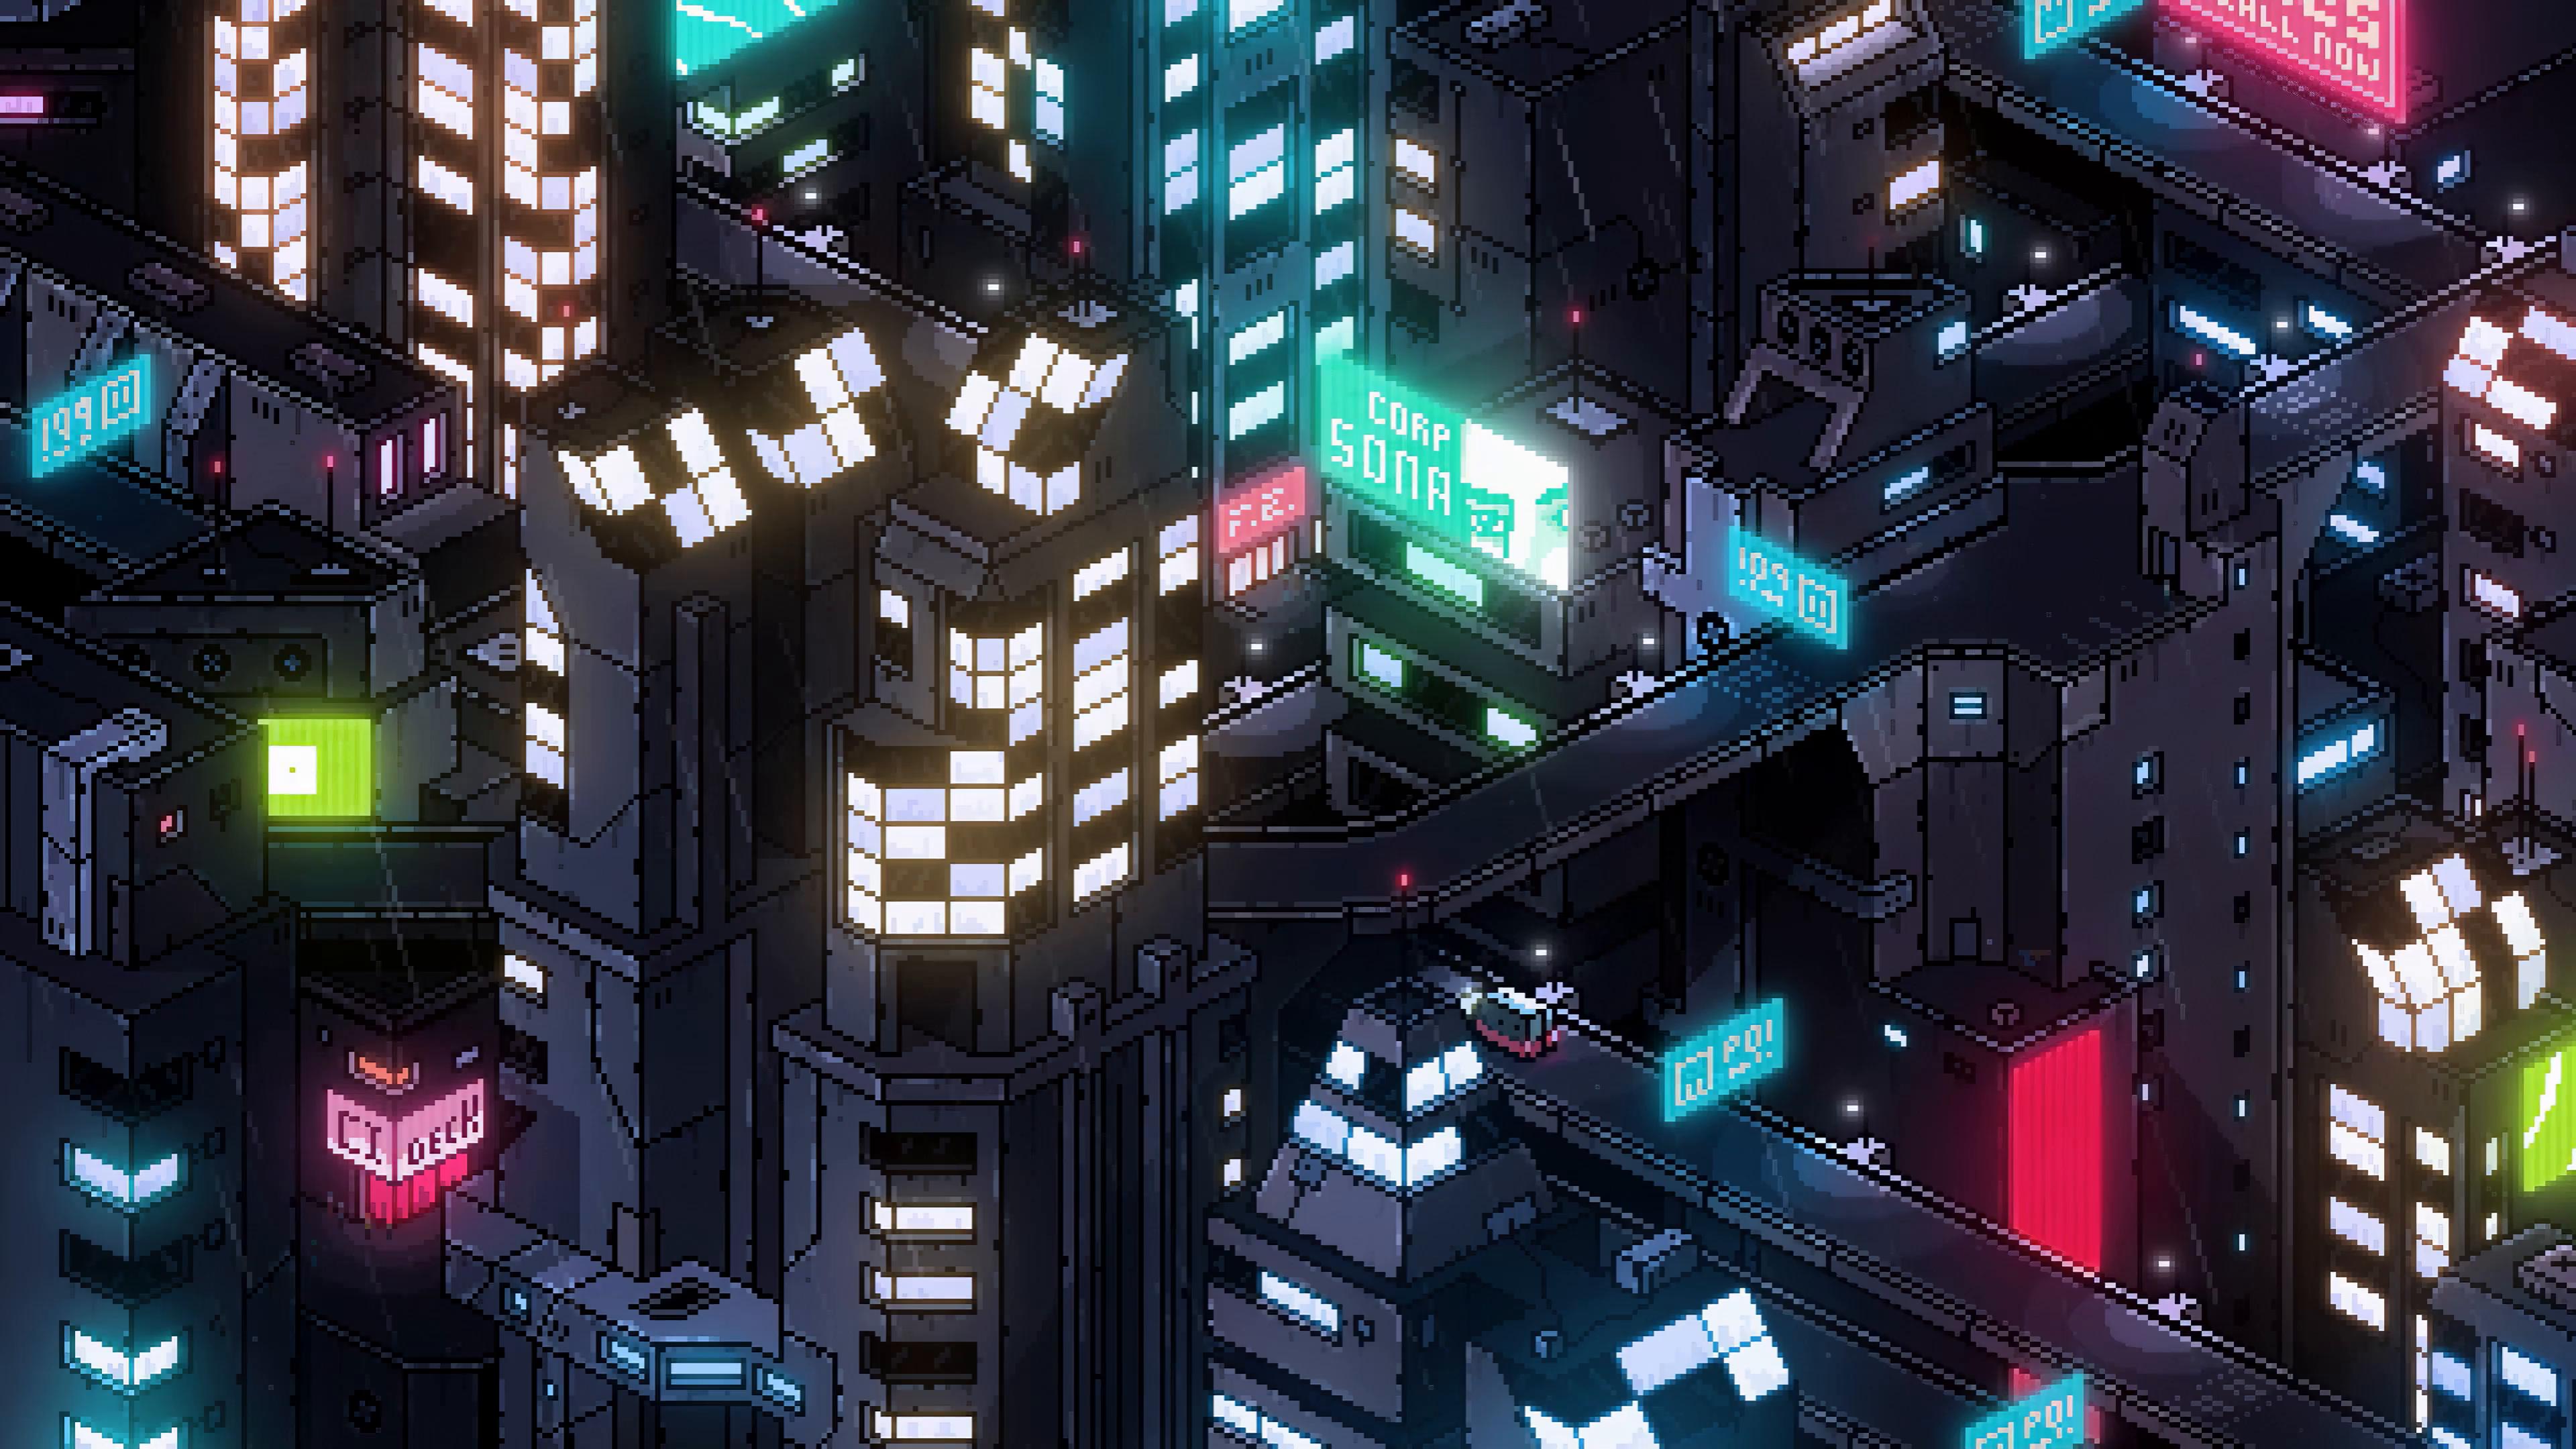 Cyberpunk City Live Wallpaper - free download